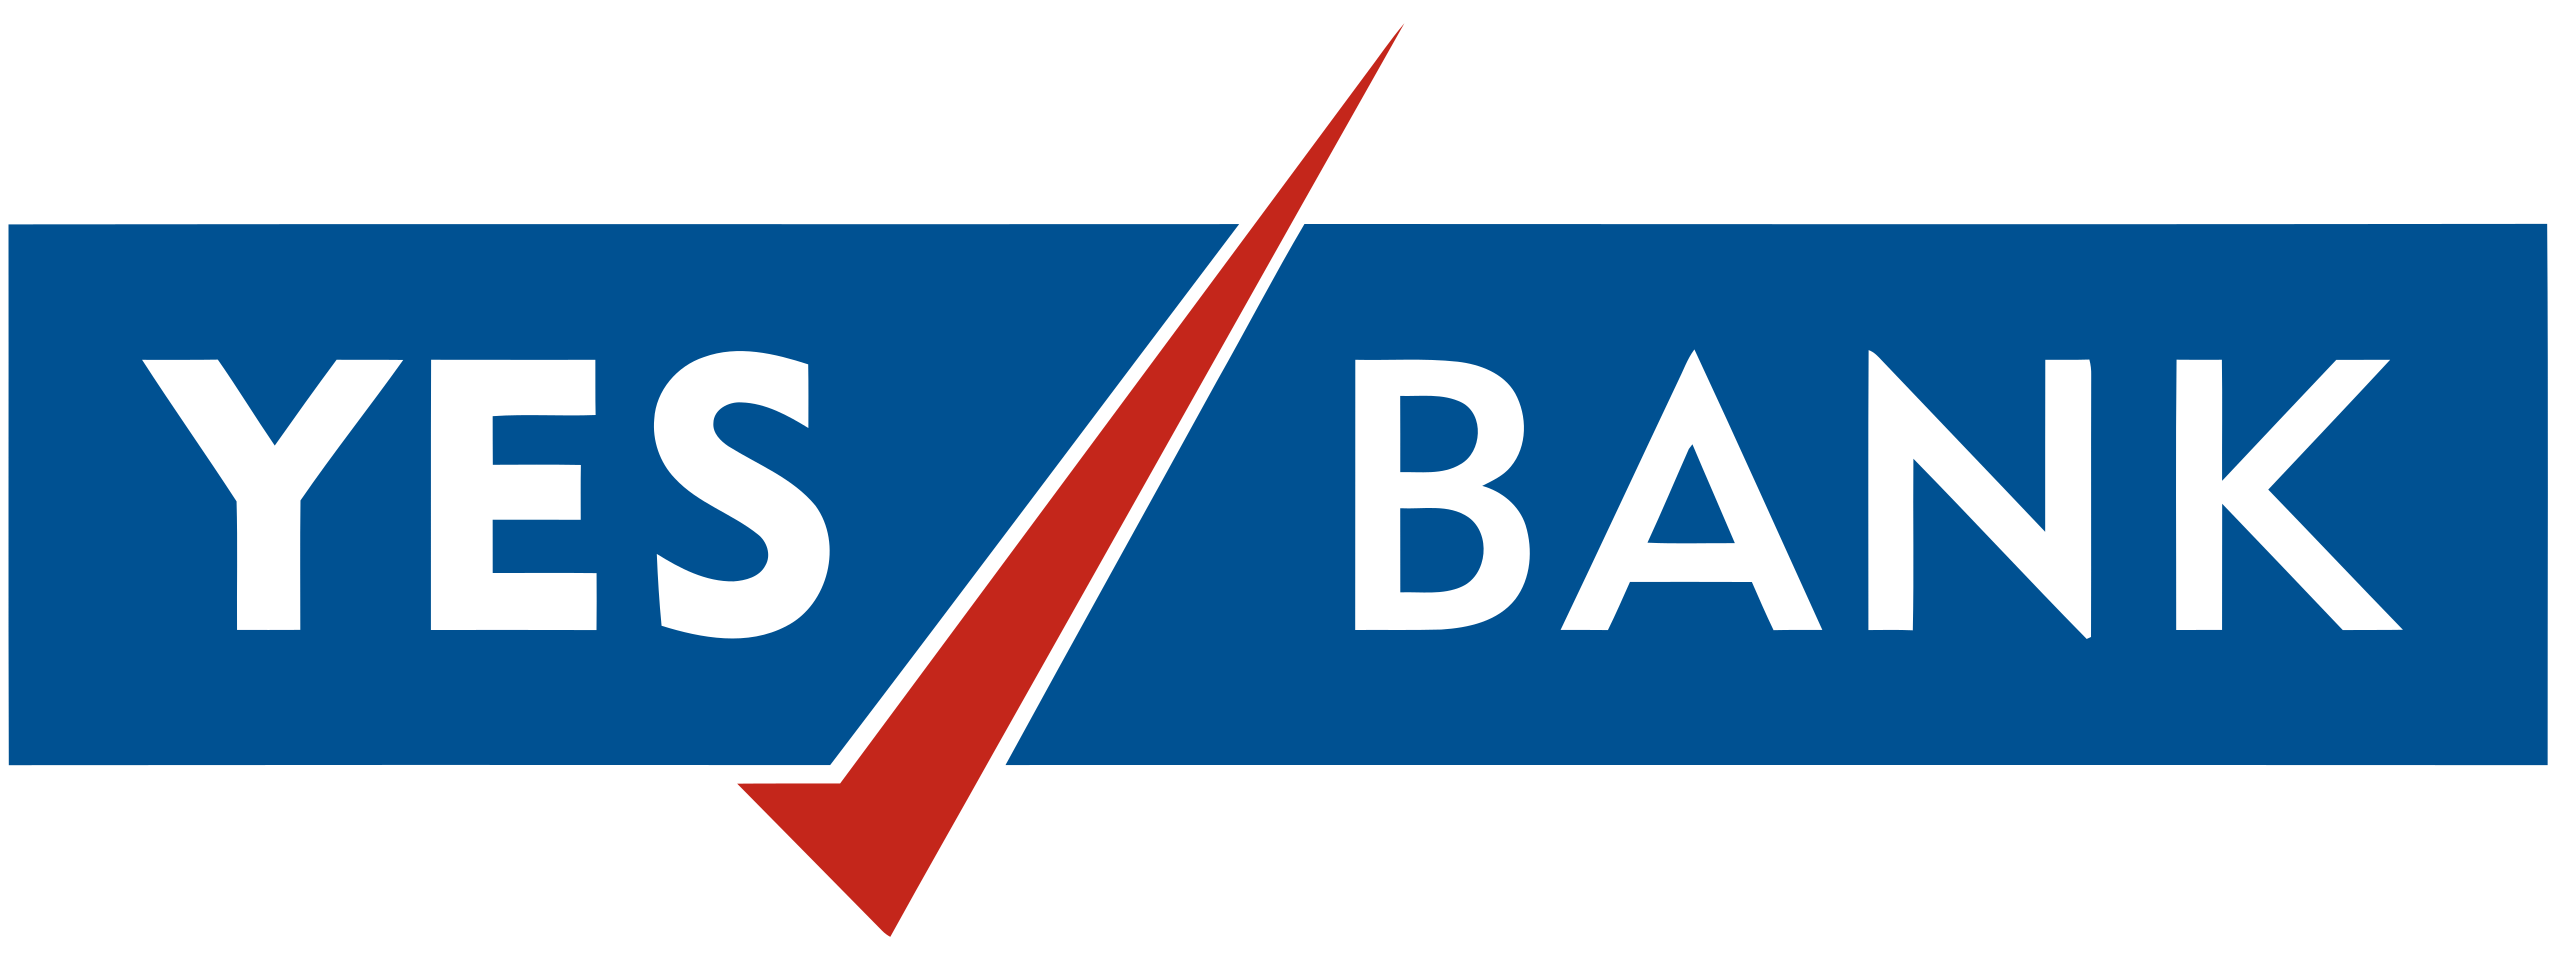 Yes Bank SVG Logo.svg